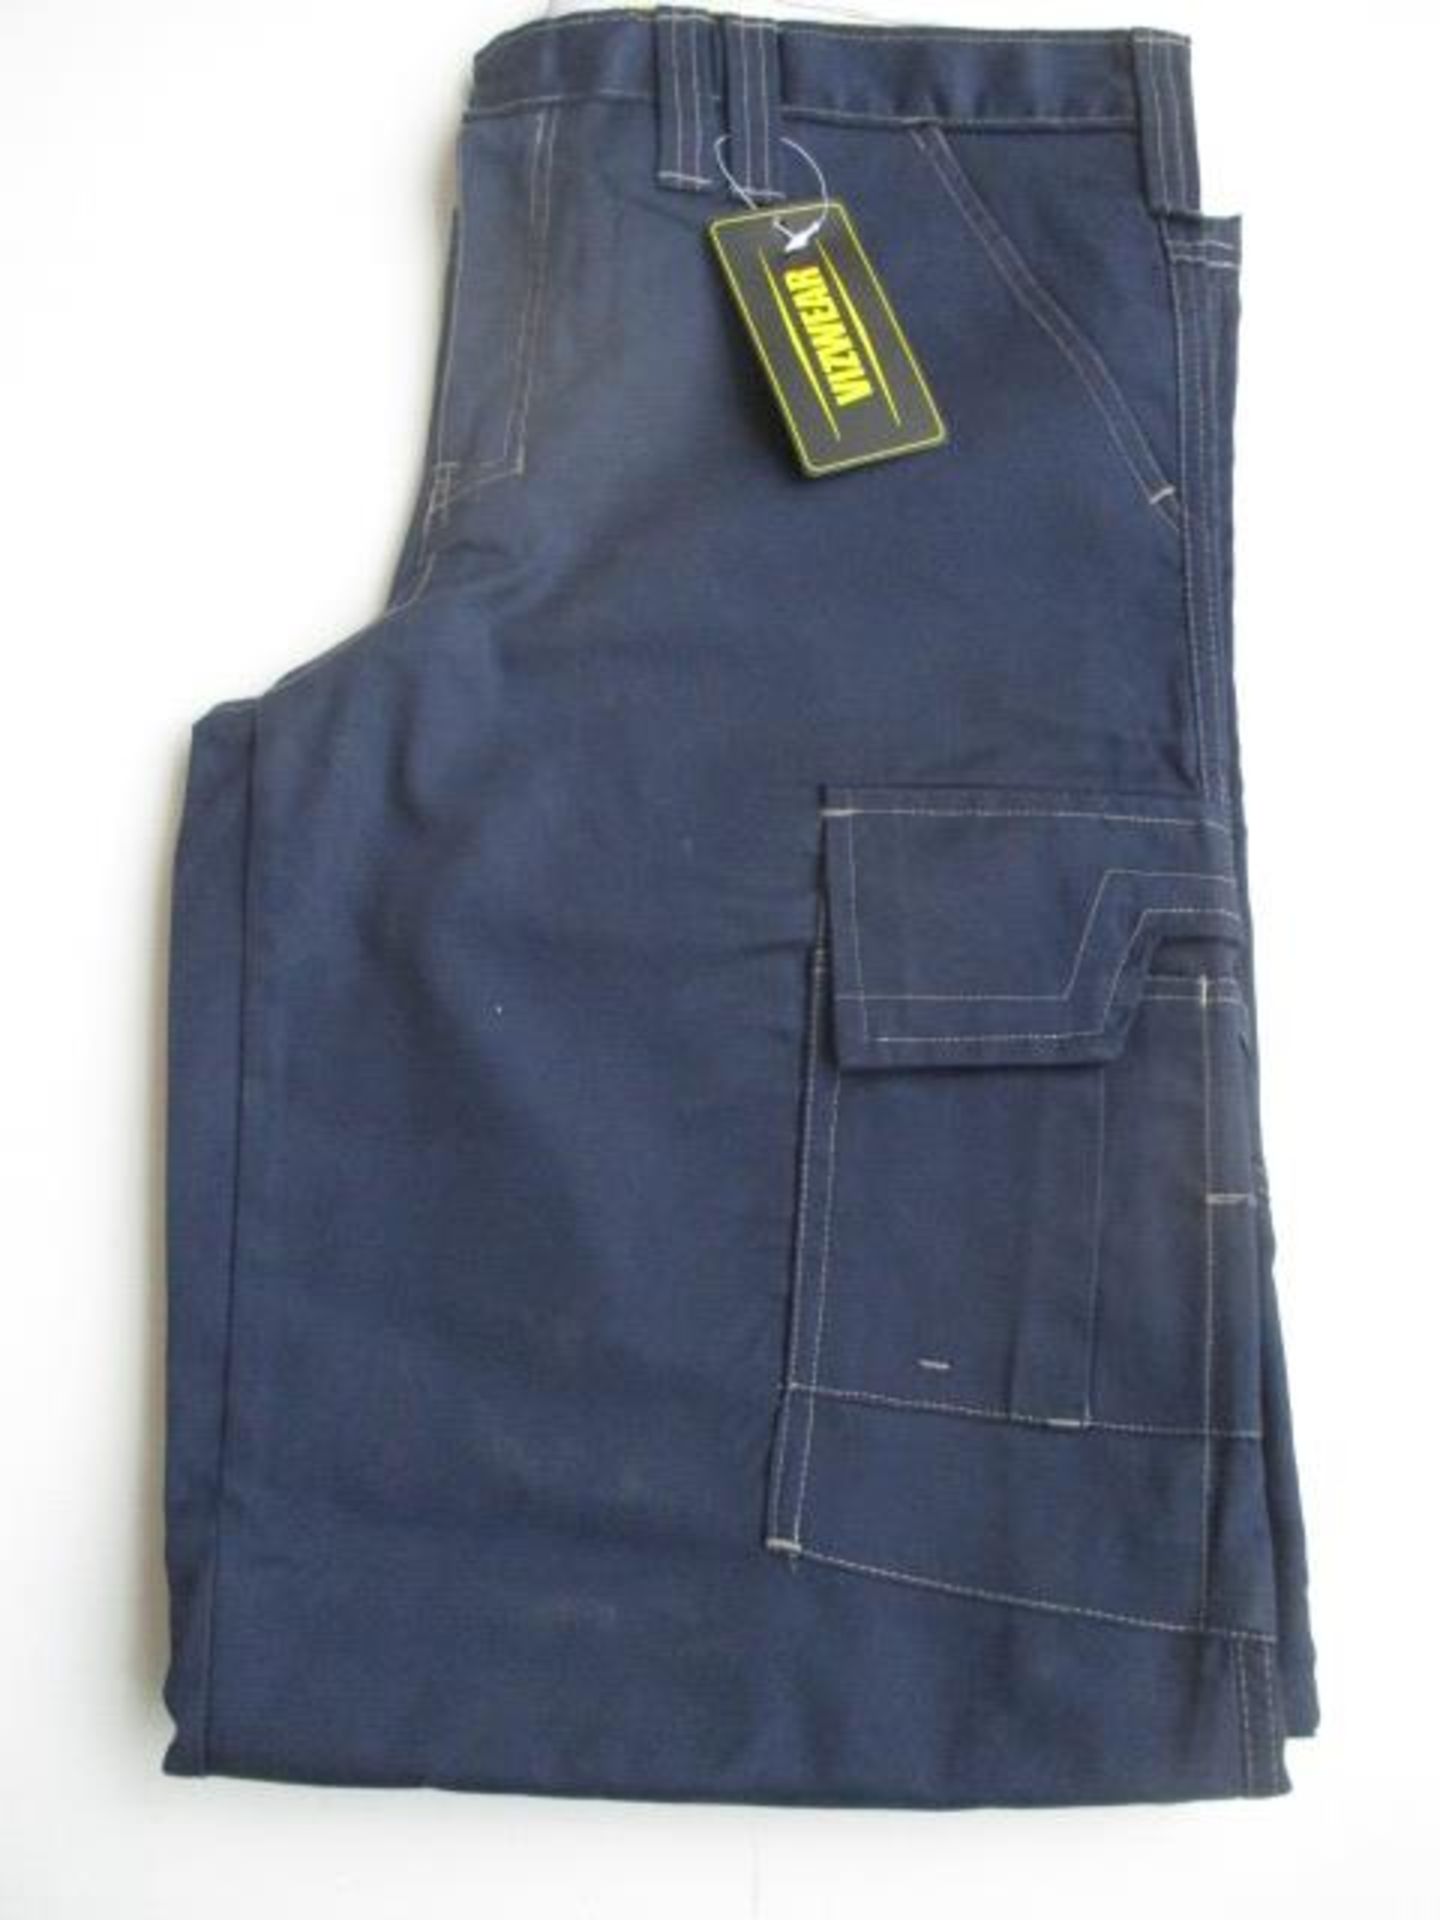 10pcs Brand new Vizwear Cargo Workwear trousers 34R